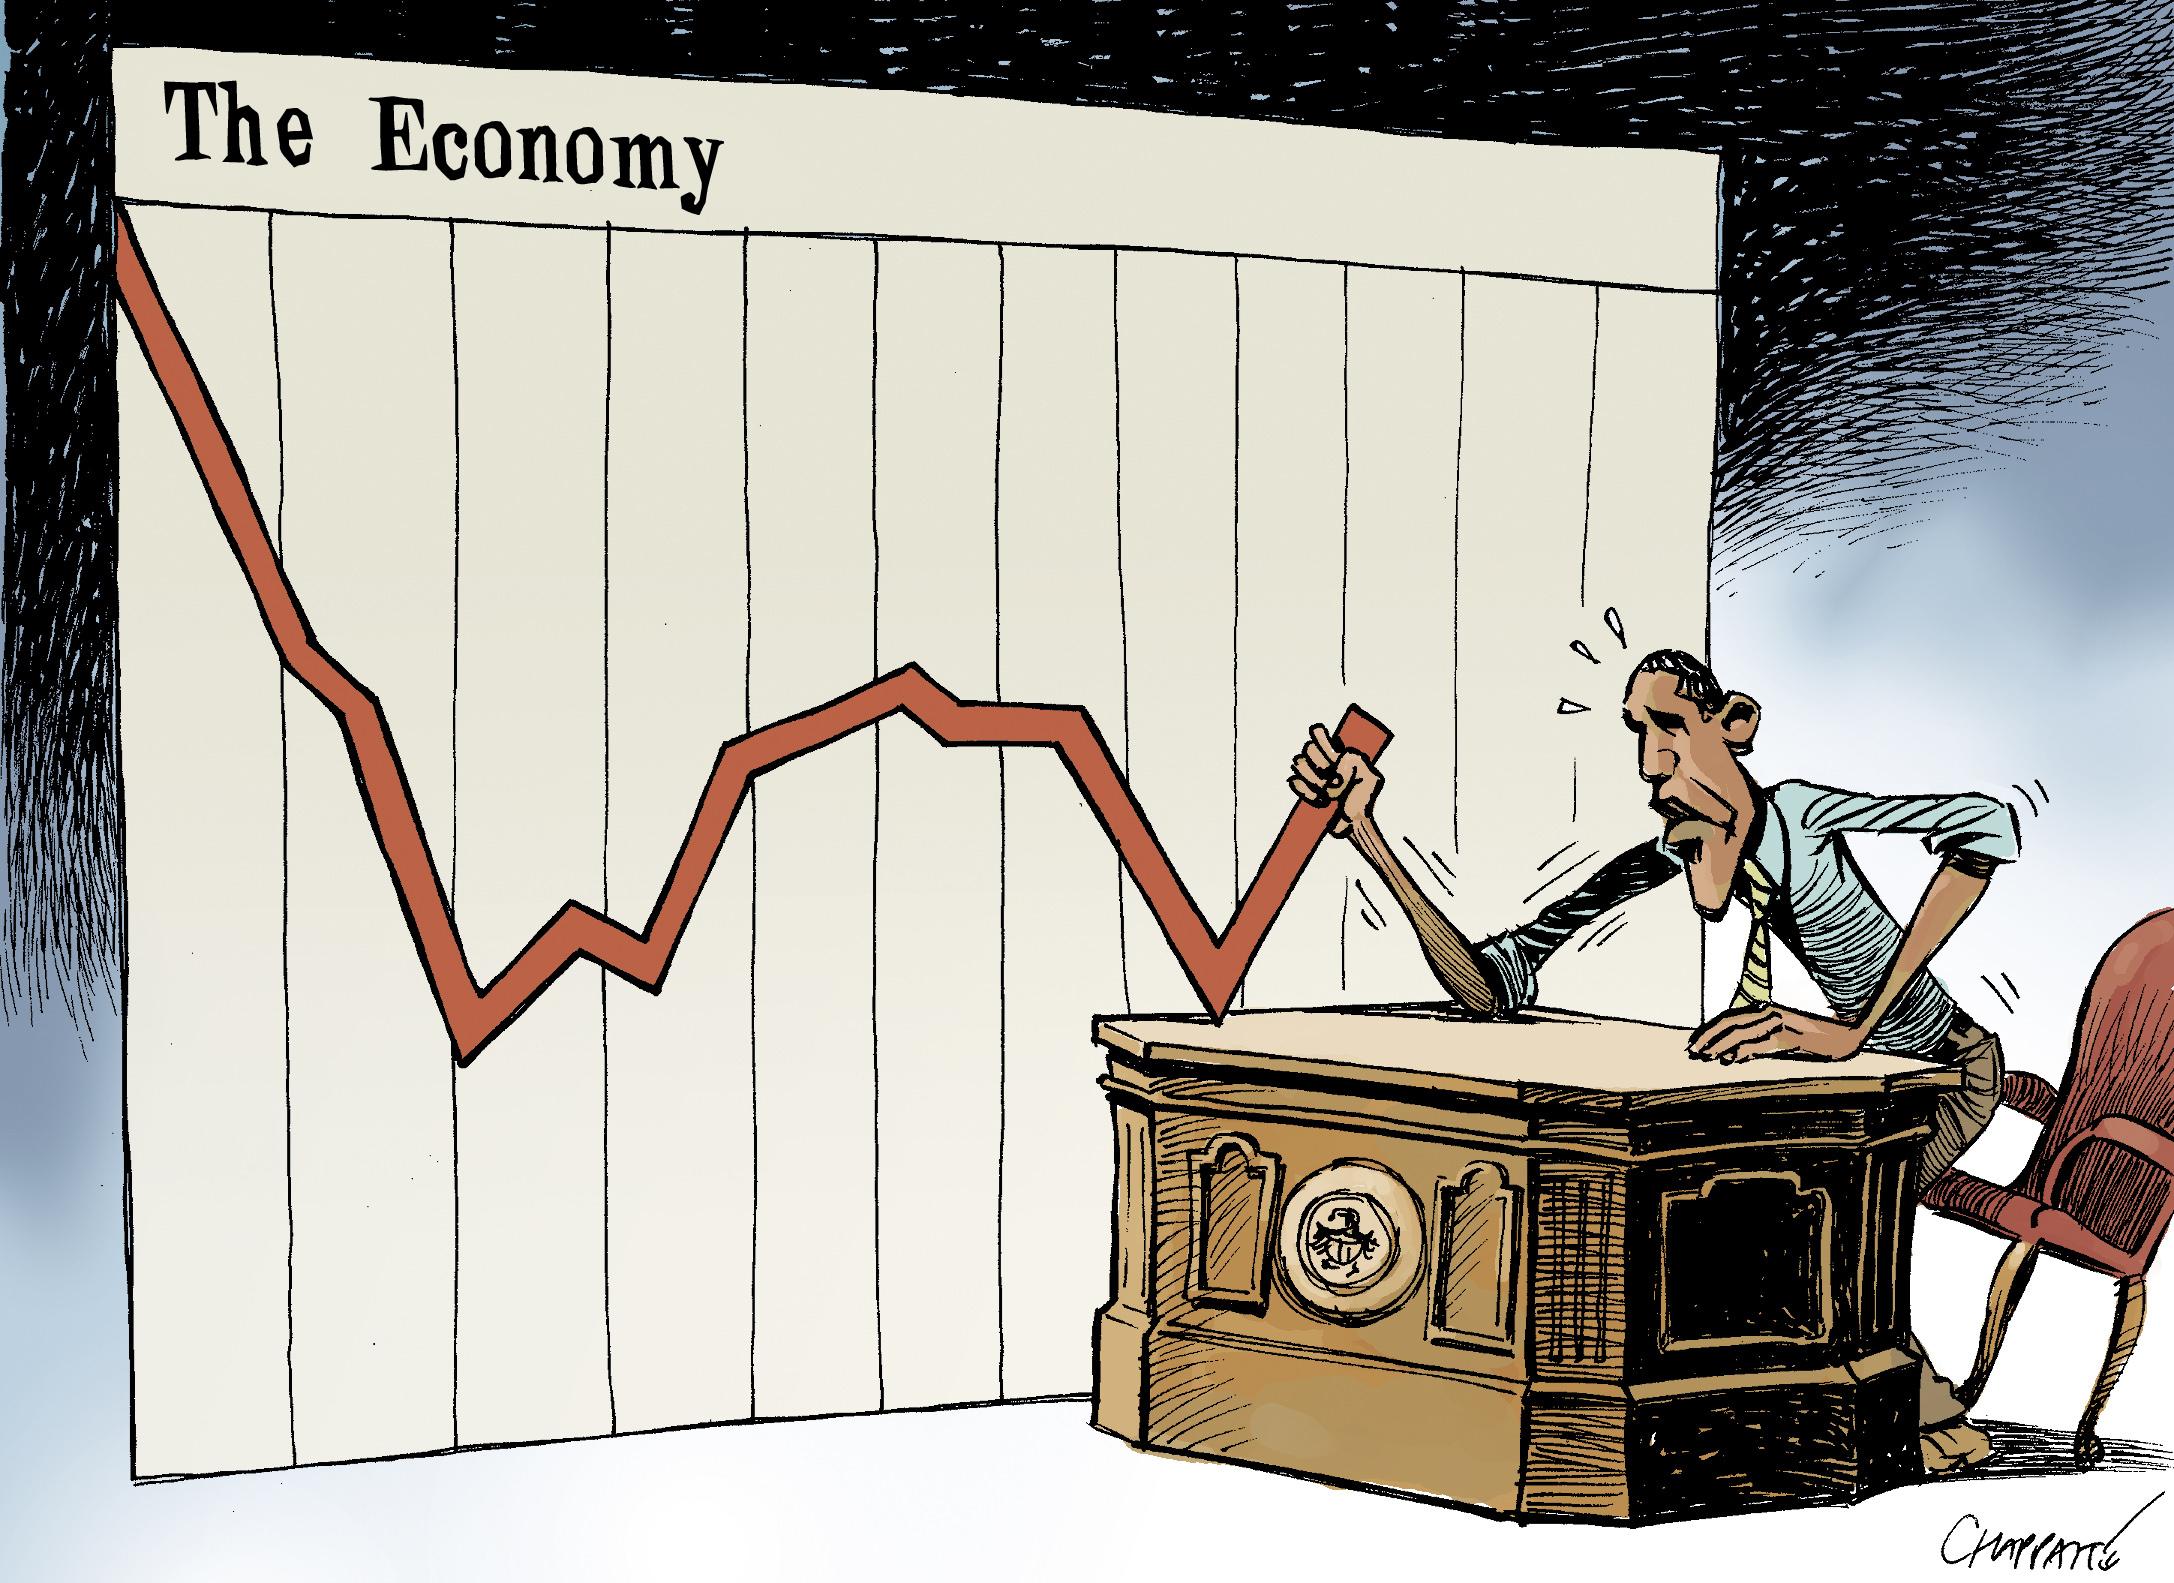 Obama and the Economy